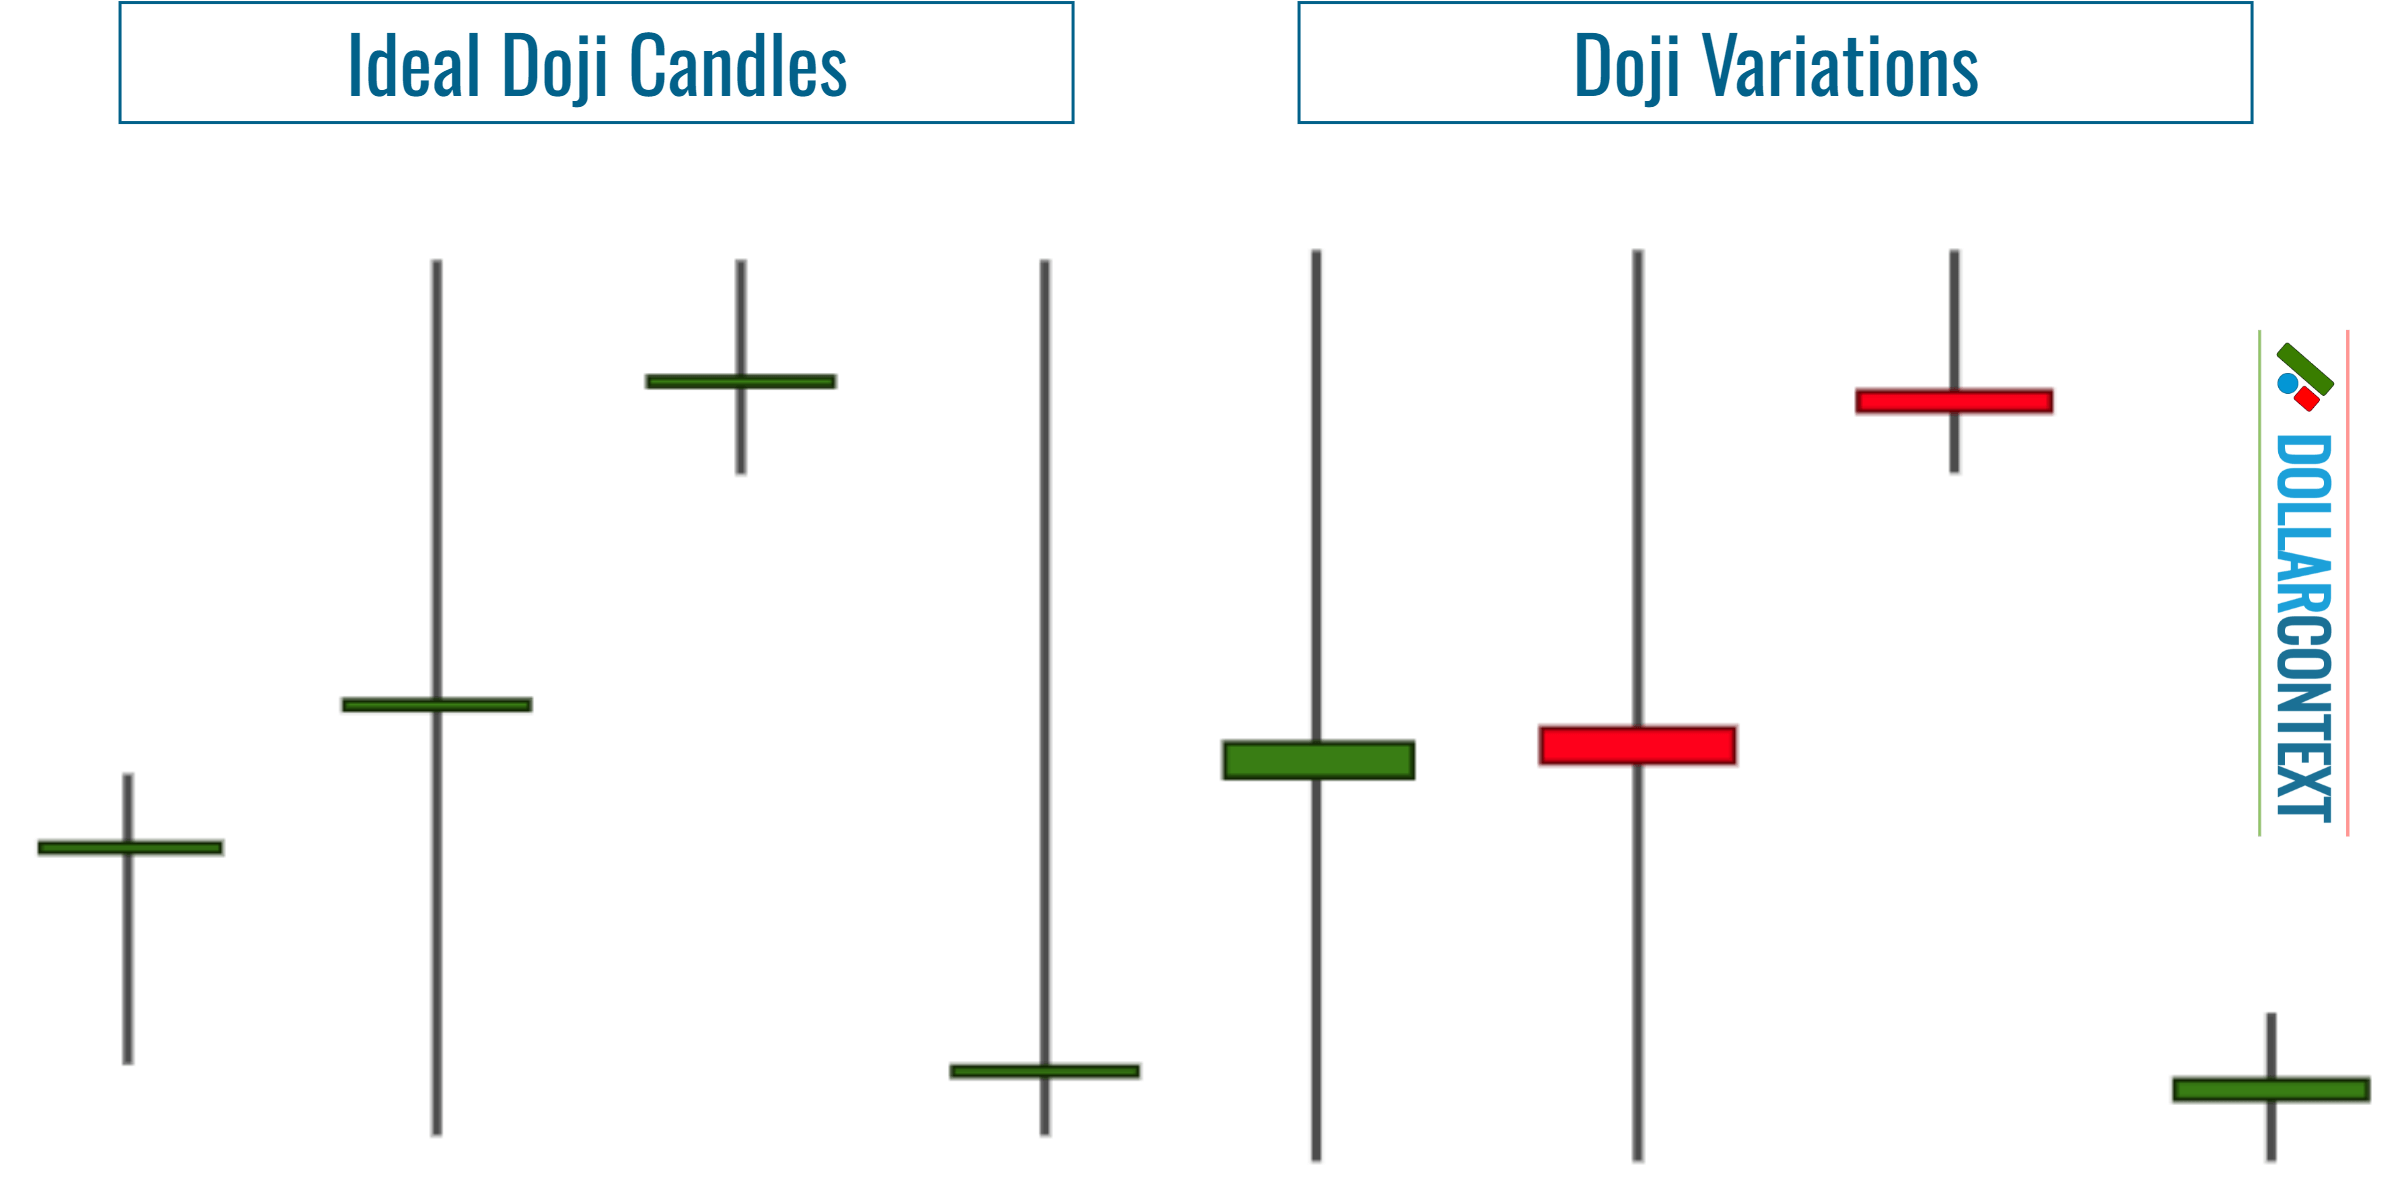 Doji Variations vs. Ideal Doji Candles